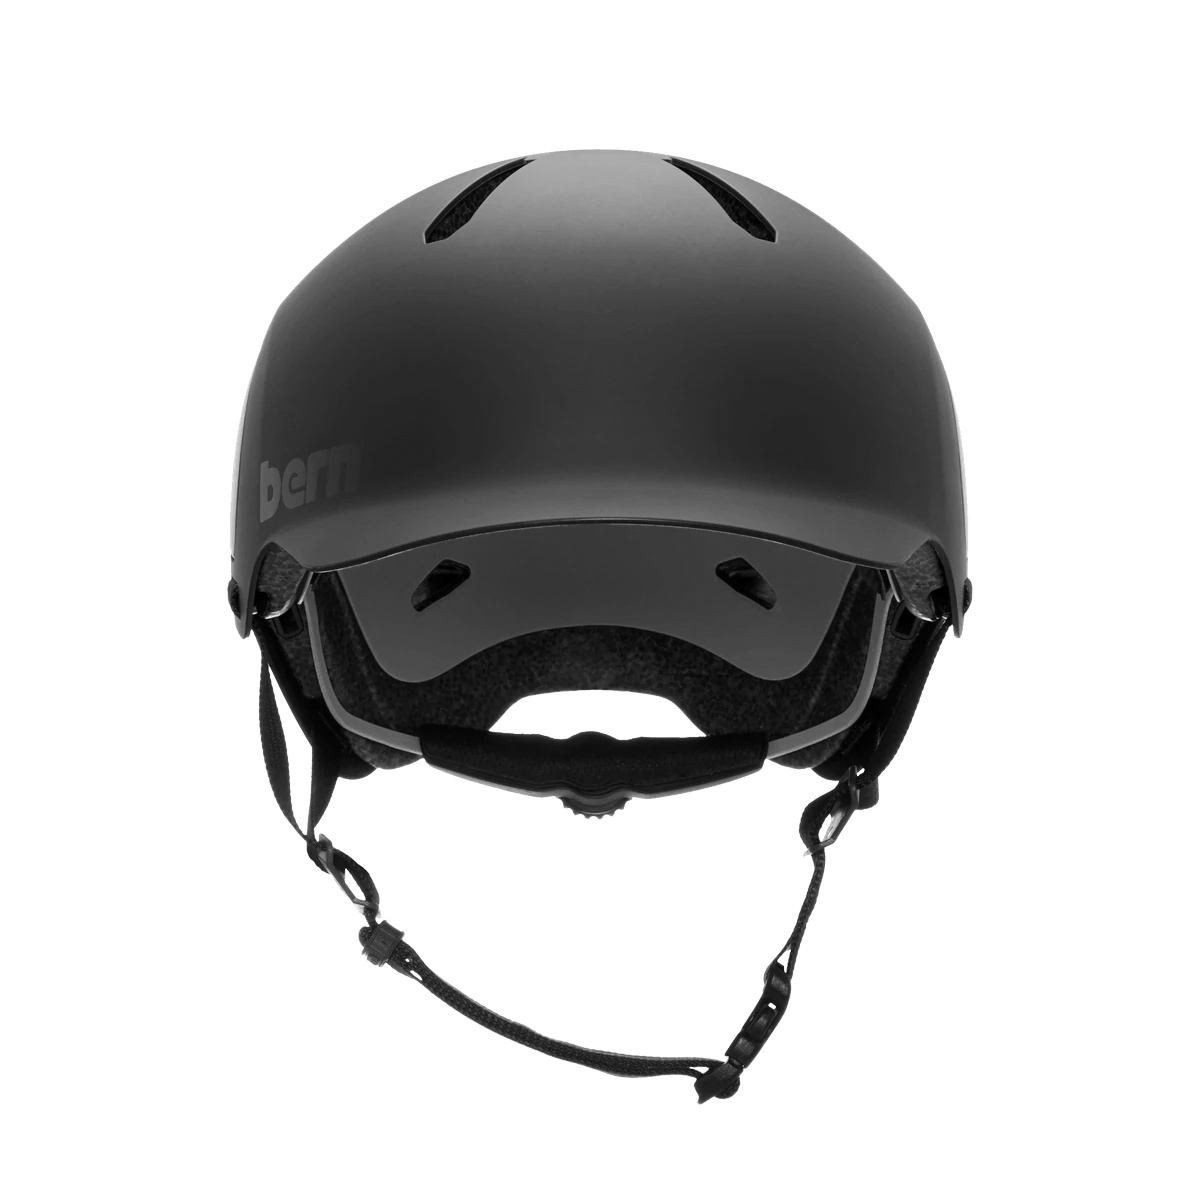 Bern Helmet Watts 2.0 Matte Black